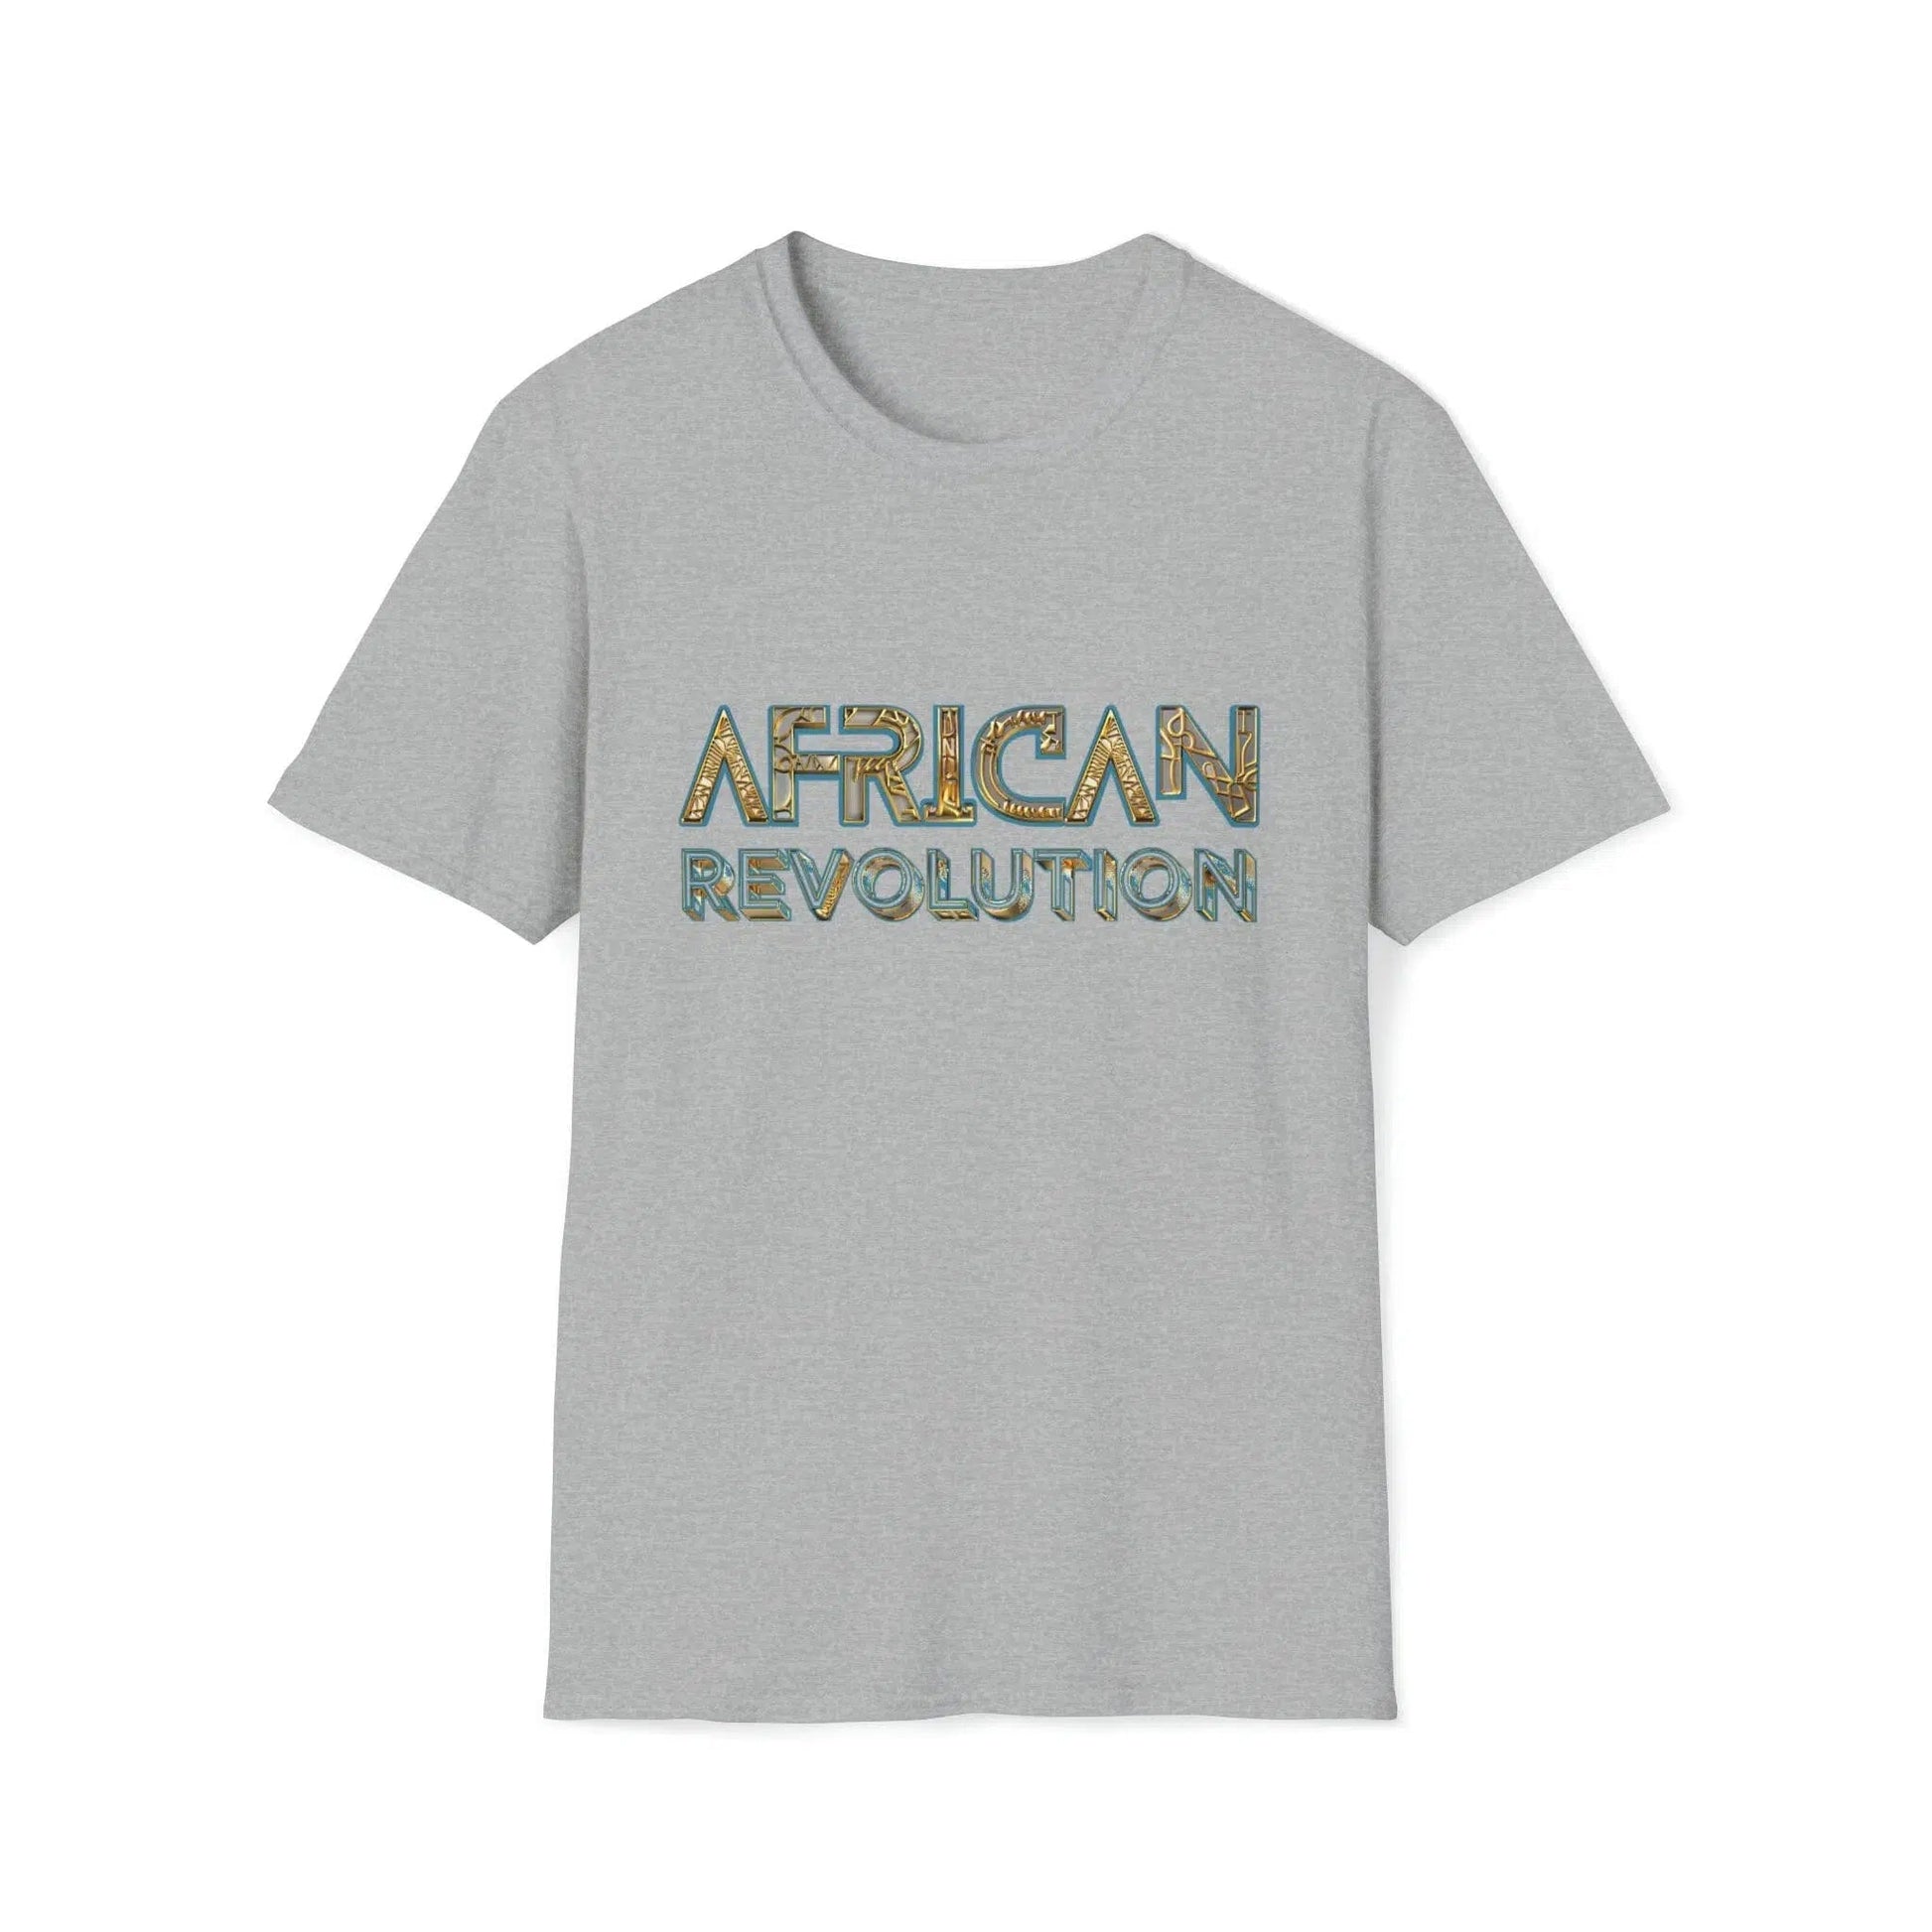 Black empowerment pride tee shirts | African Revolution Golden